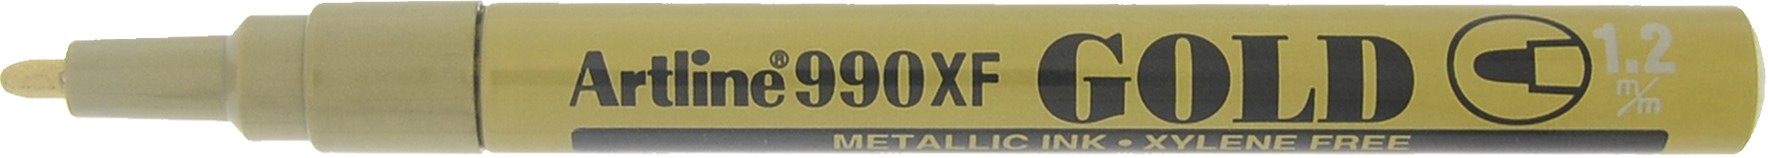 Marker cu vopsea ARTLINE 990XF, corp metalic, varf rotund 1.2mm - auriu